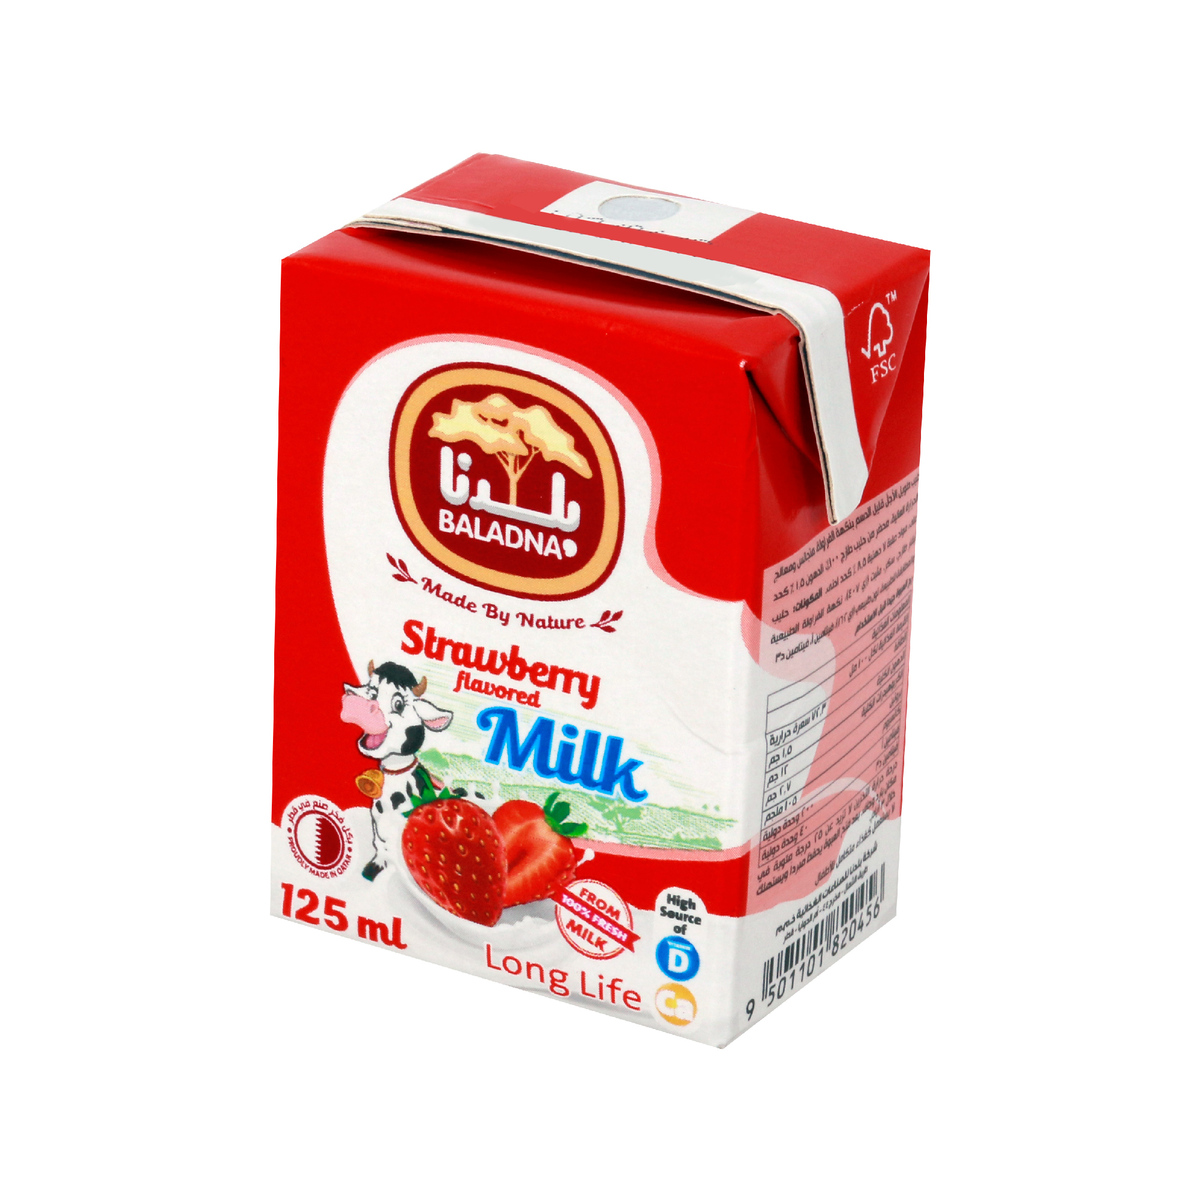 Baladna UHT Flavored Milk Strawberry 125ml